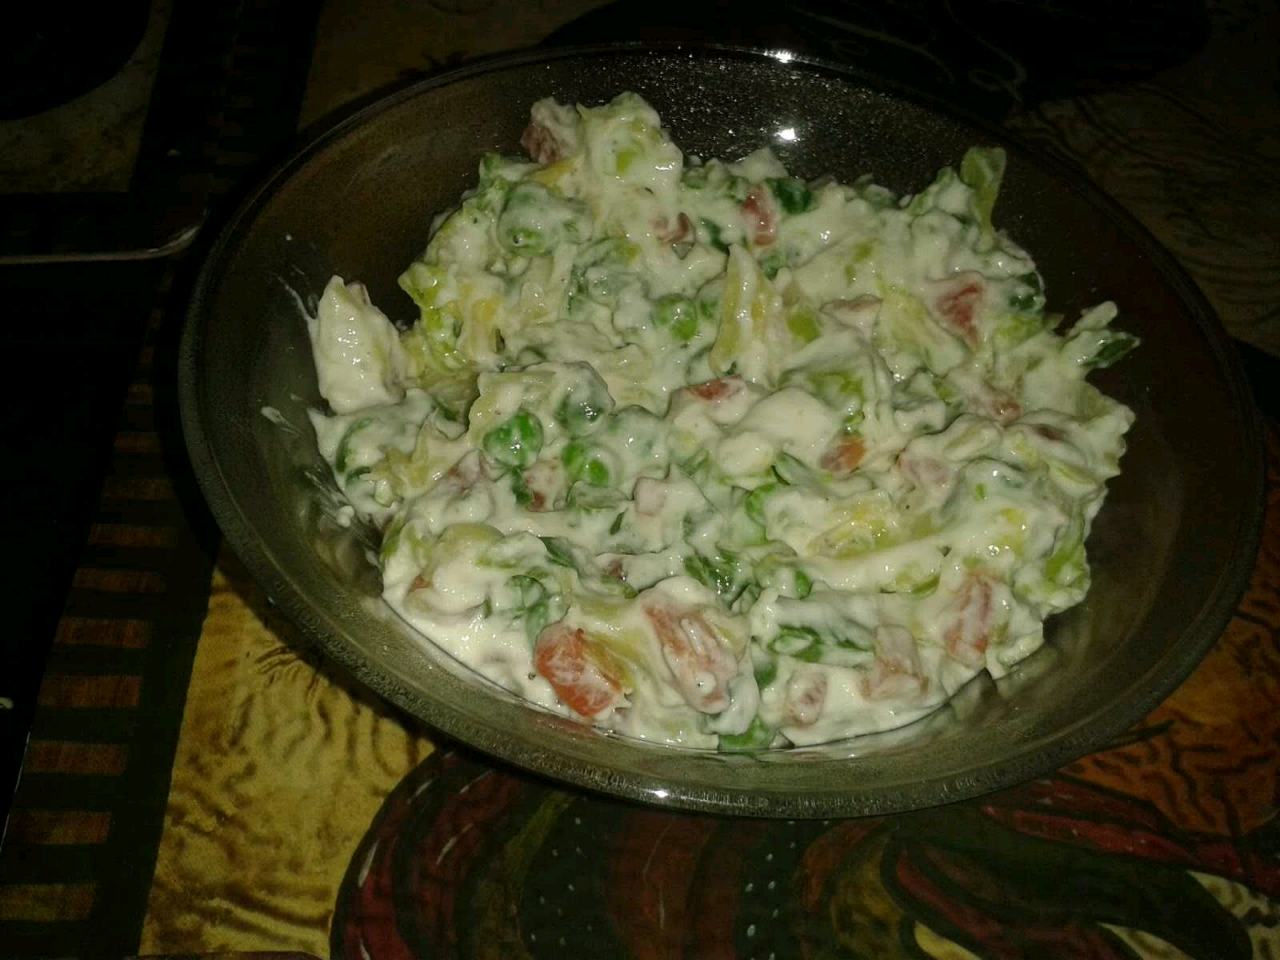 Russian Salad